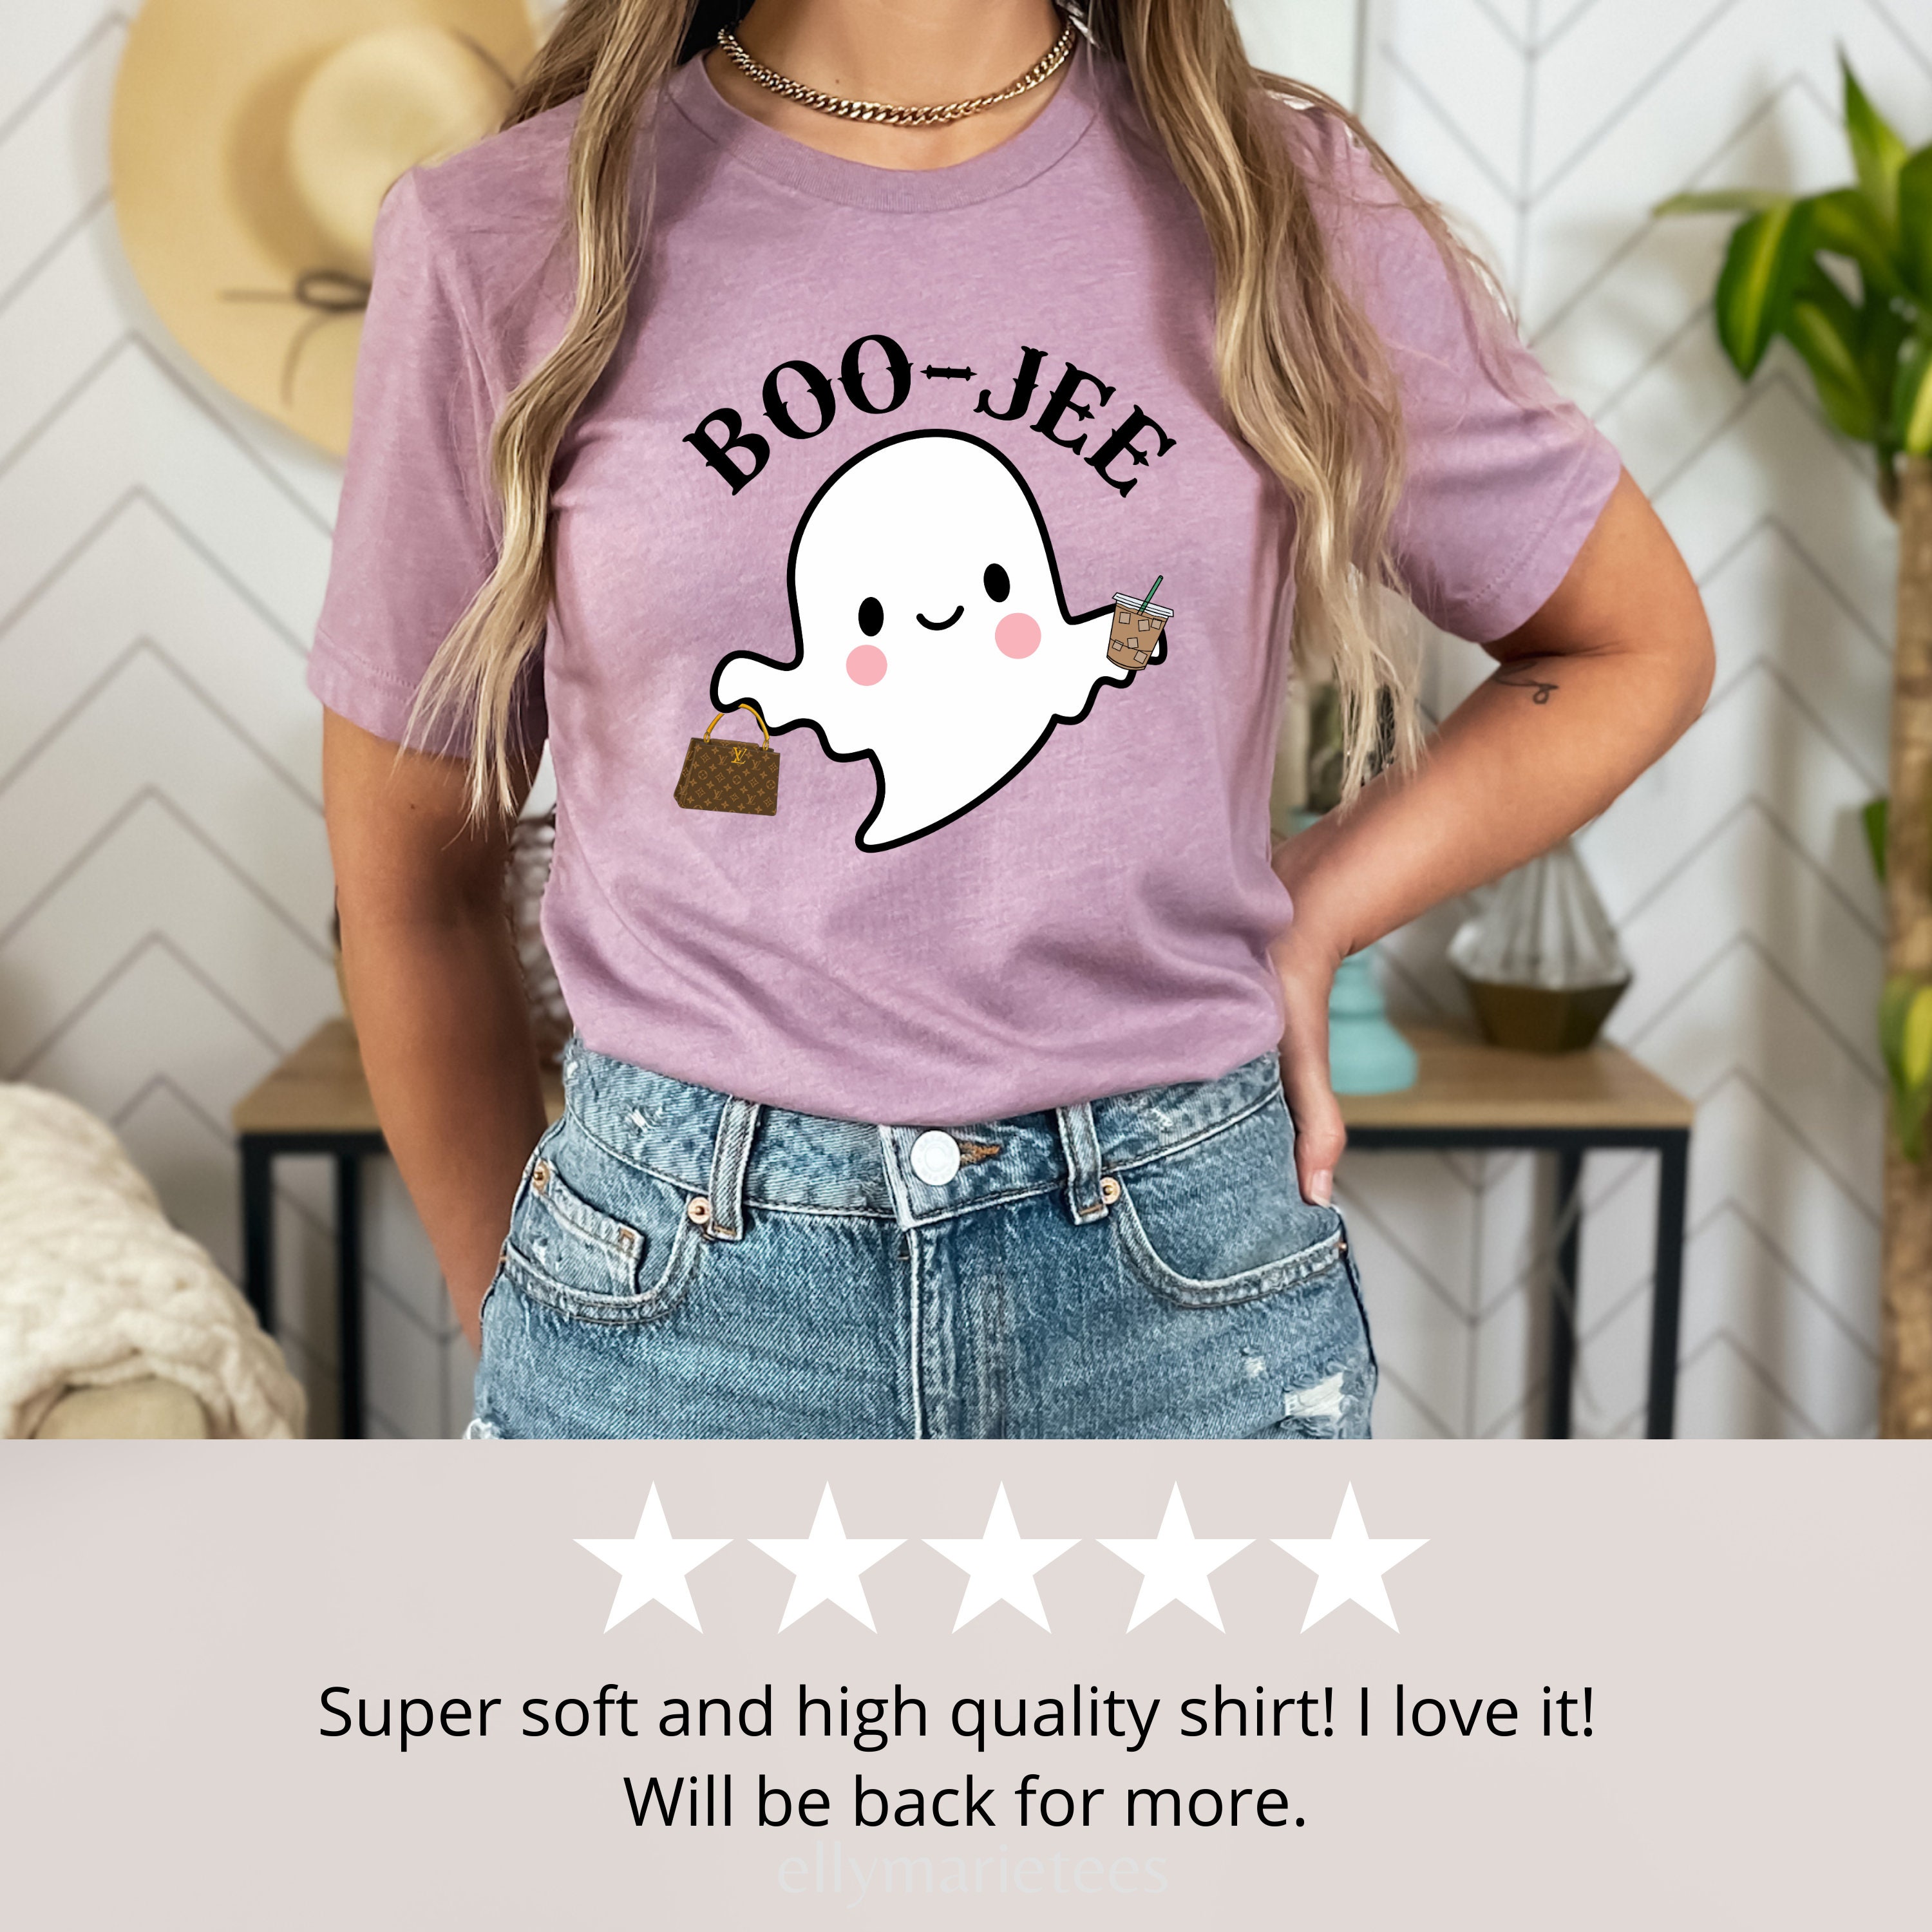 Halloween Shirt Boojee Ghost Shirt Louis Shirt Bougie 